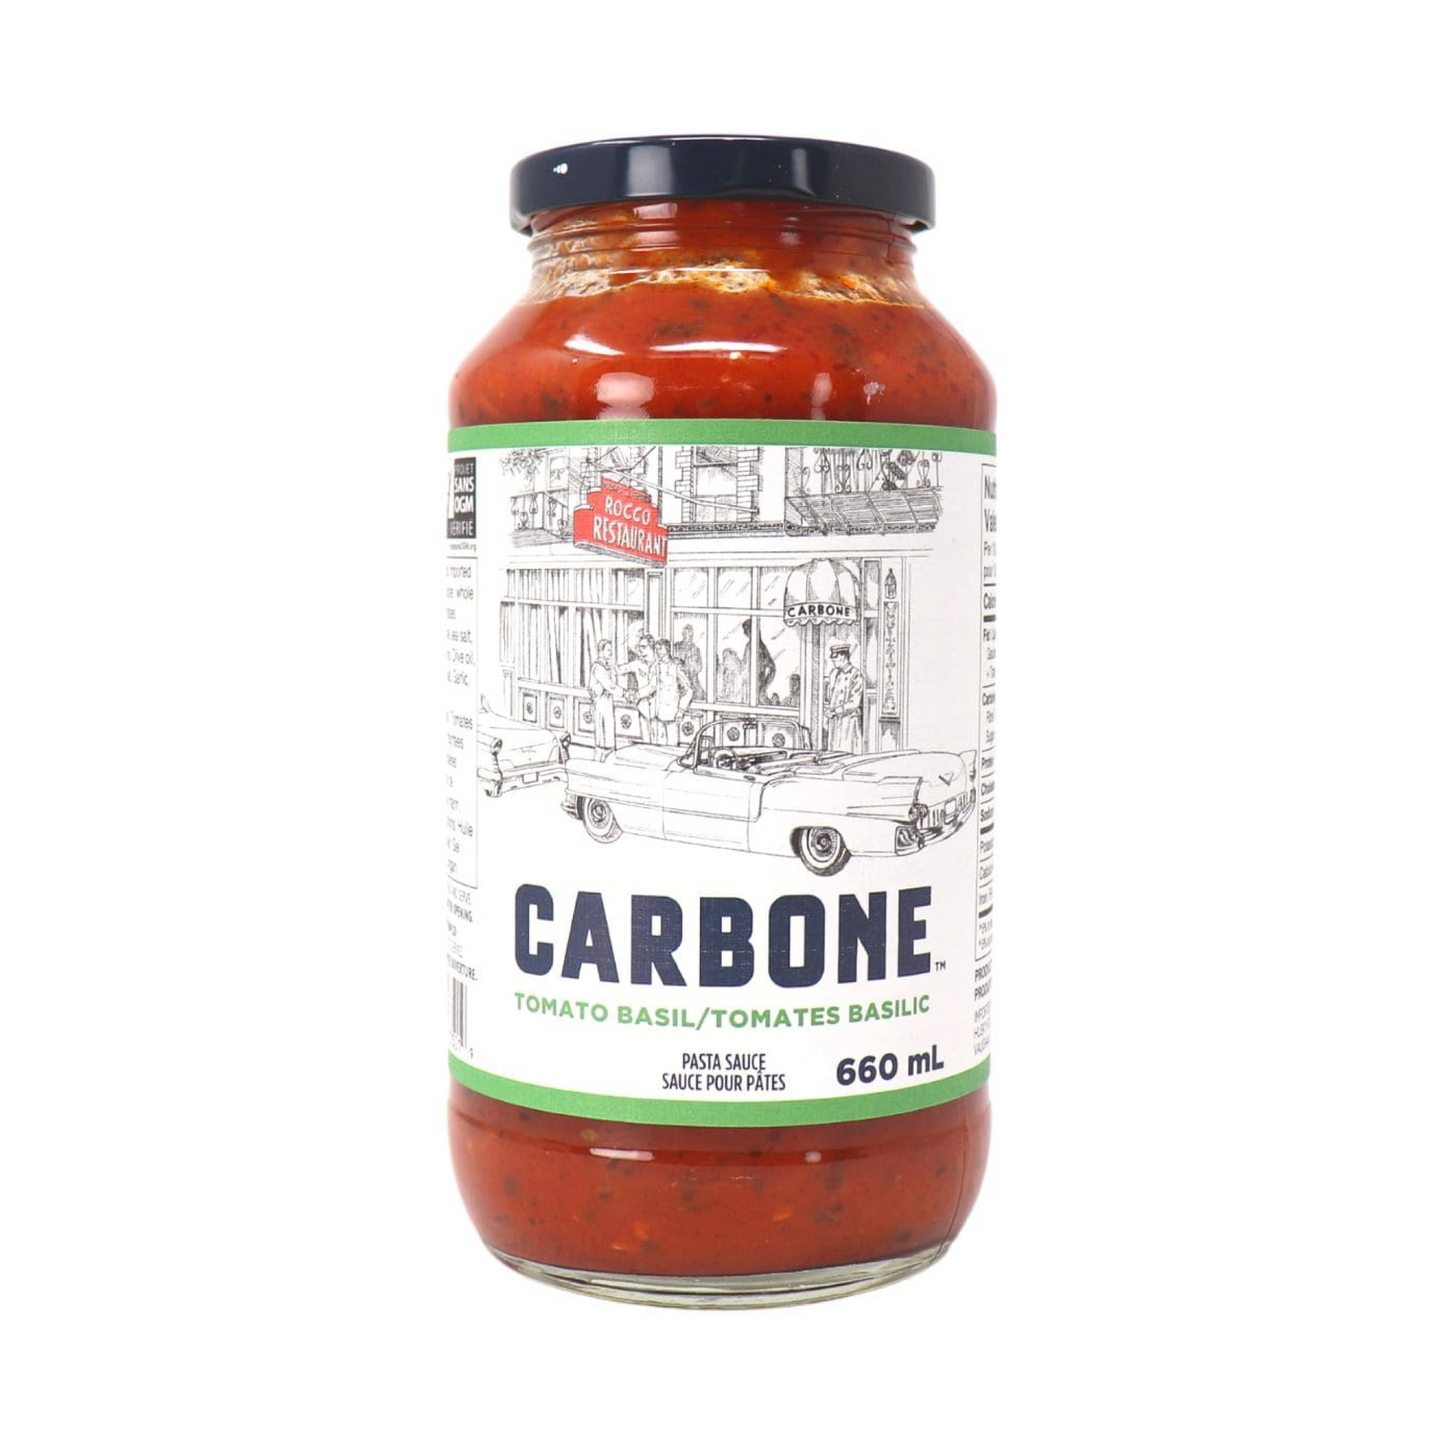 Carbone Tomato Basil Pasta Sauce 680g